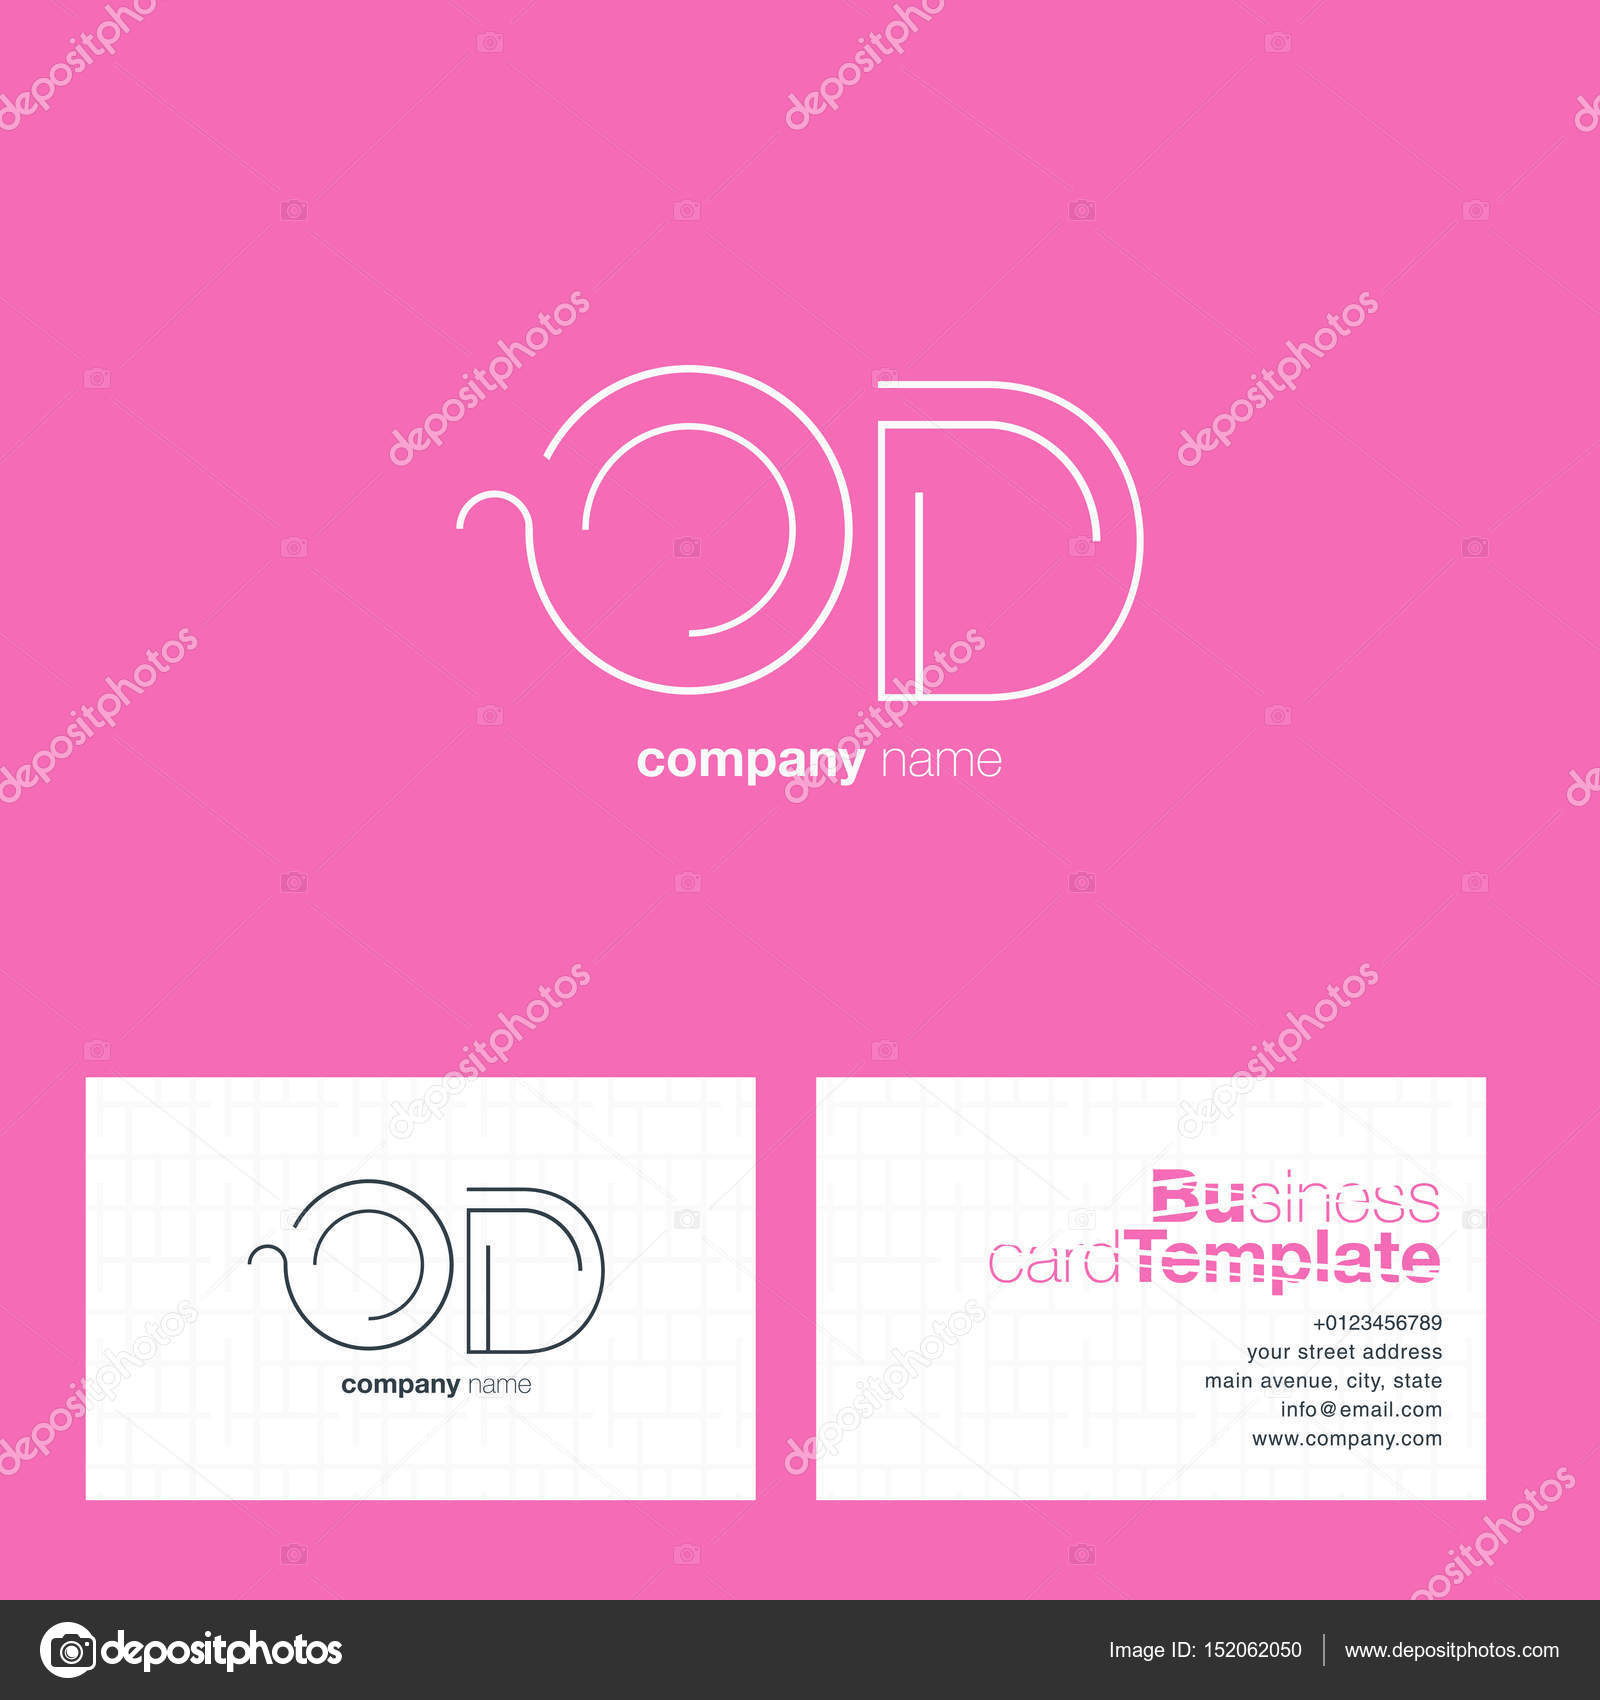 business card template size fresh design circle business card template od letters logo business card stock